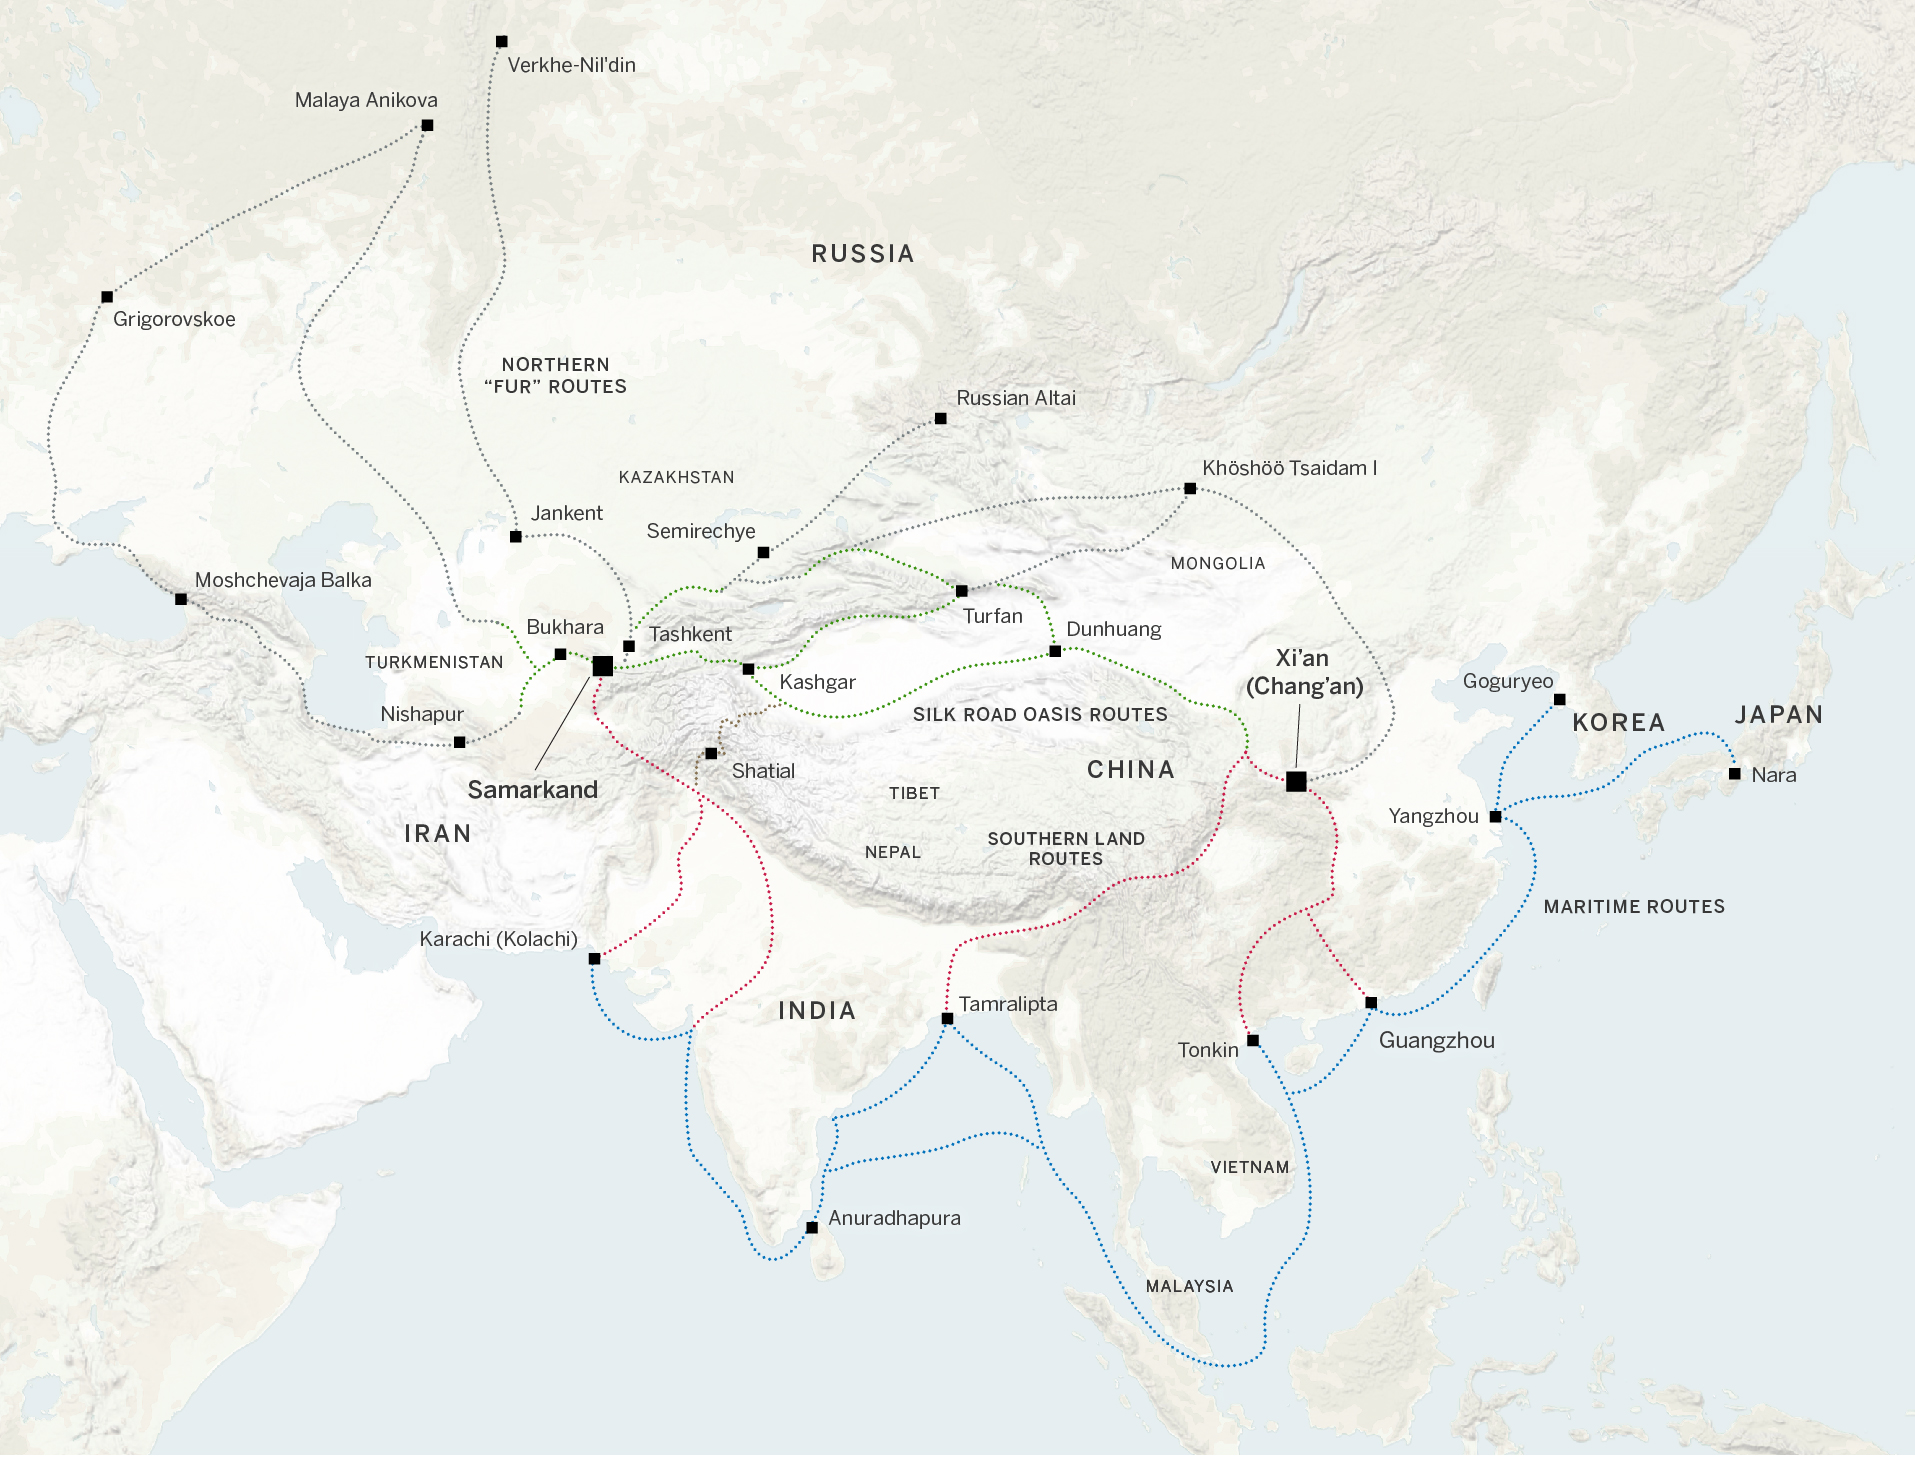 Routes connecting Levant to Korea